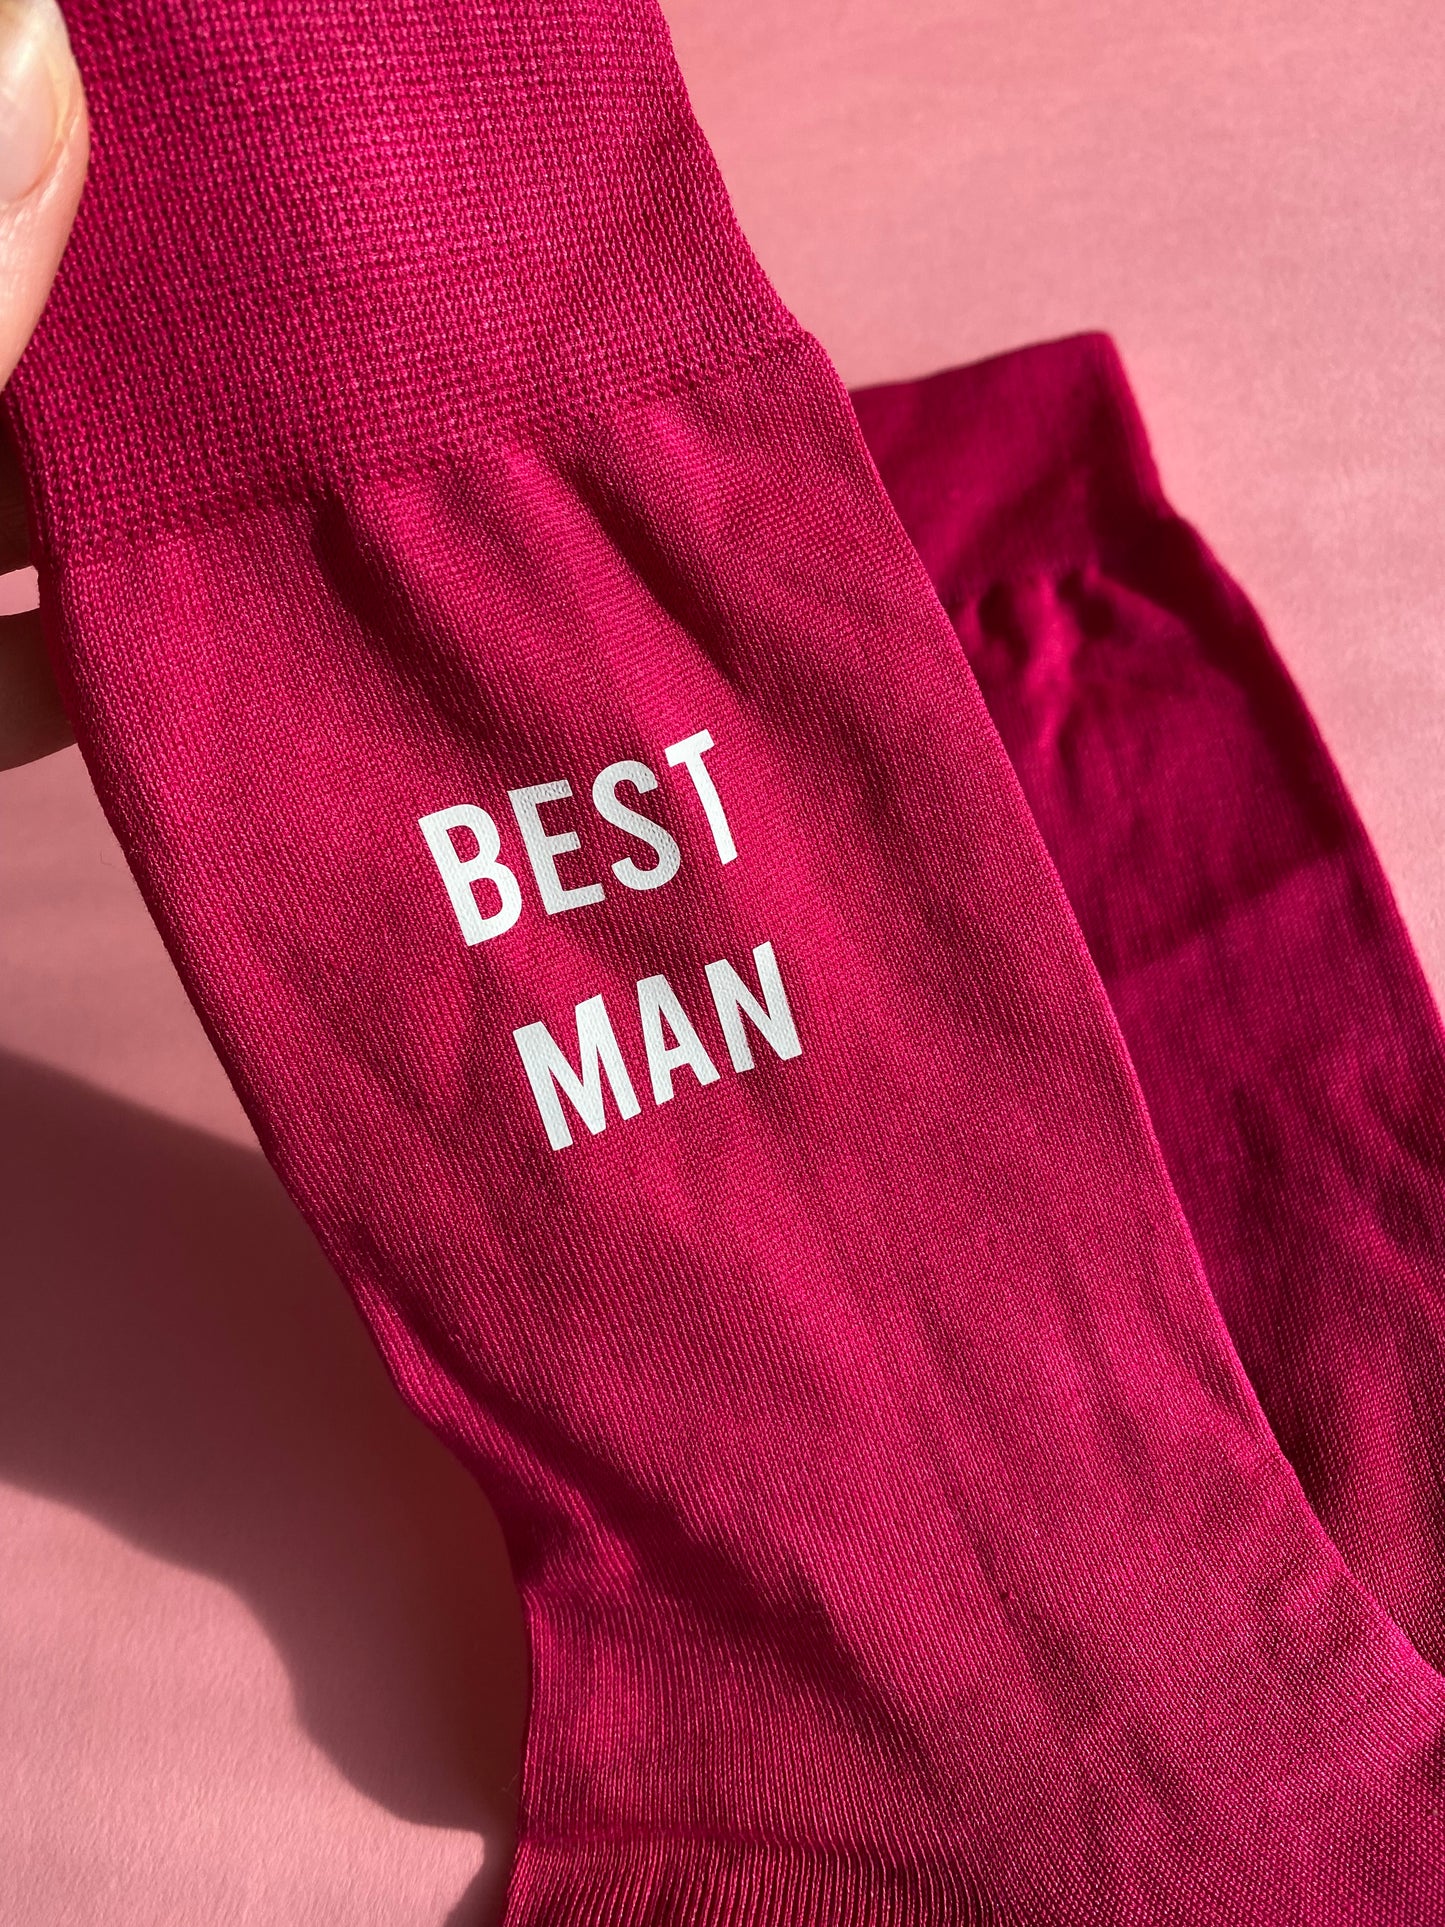 43-46 (9-11) Best Man Wedding Socks - Hot Pink SALE